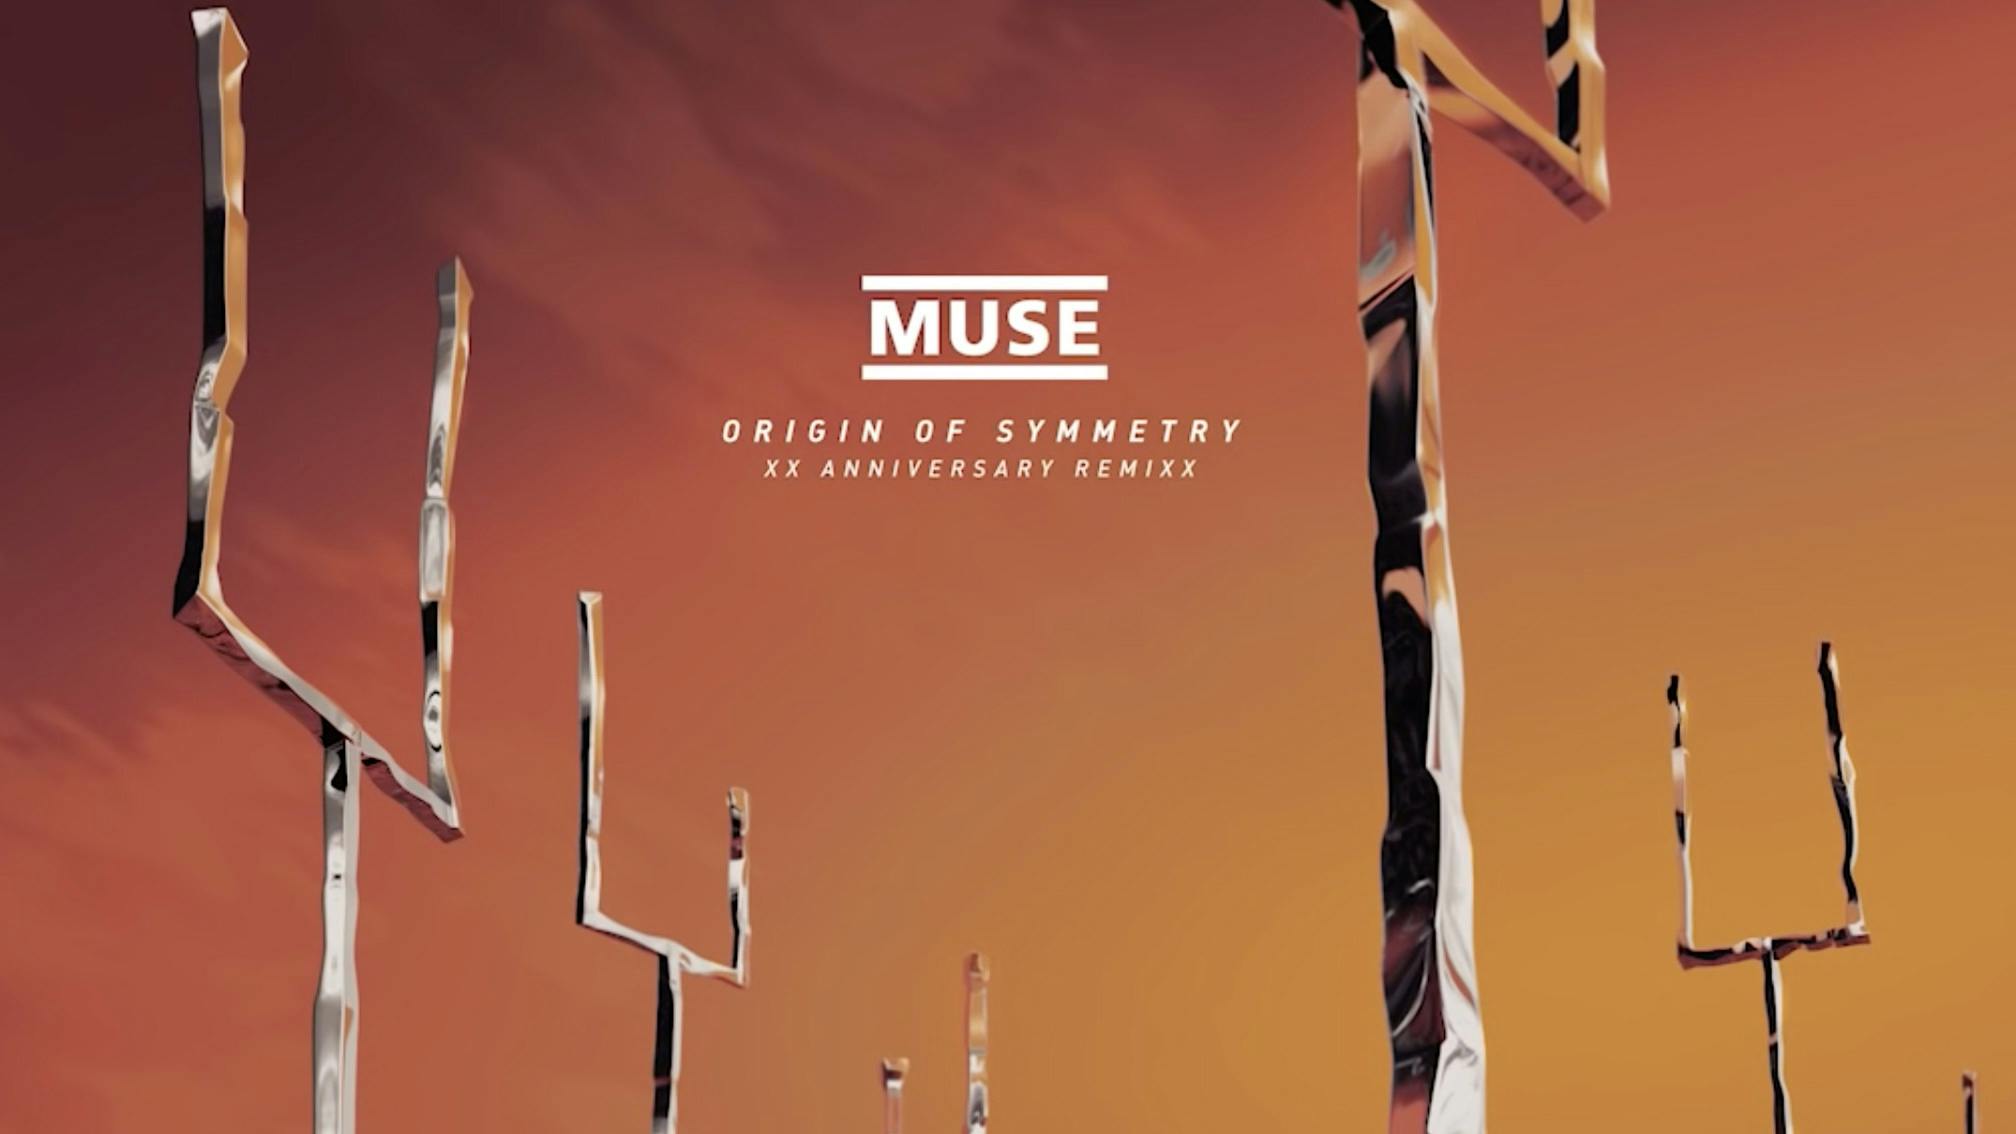 Muse announce Origin Of Symmetry 20th anniversary remix album